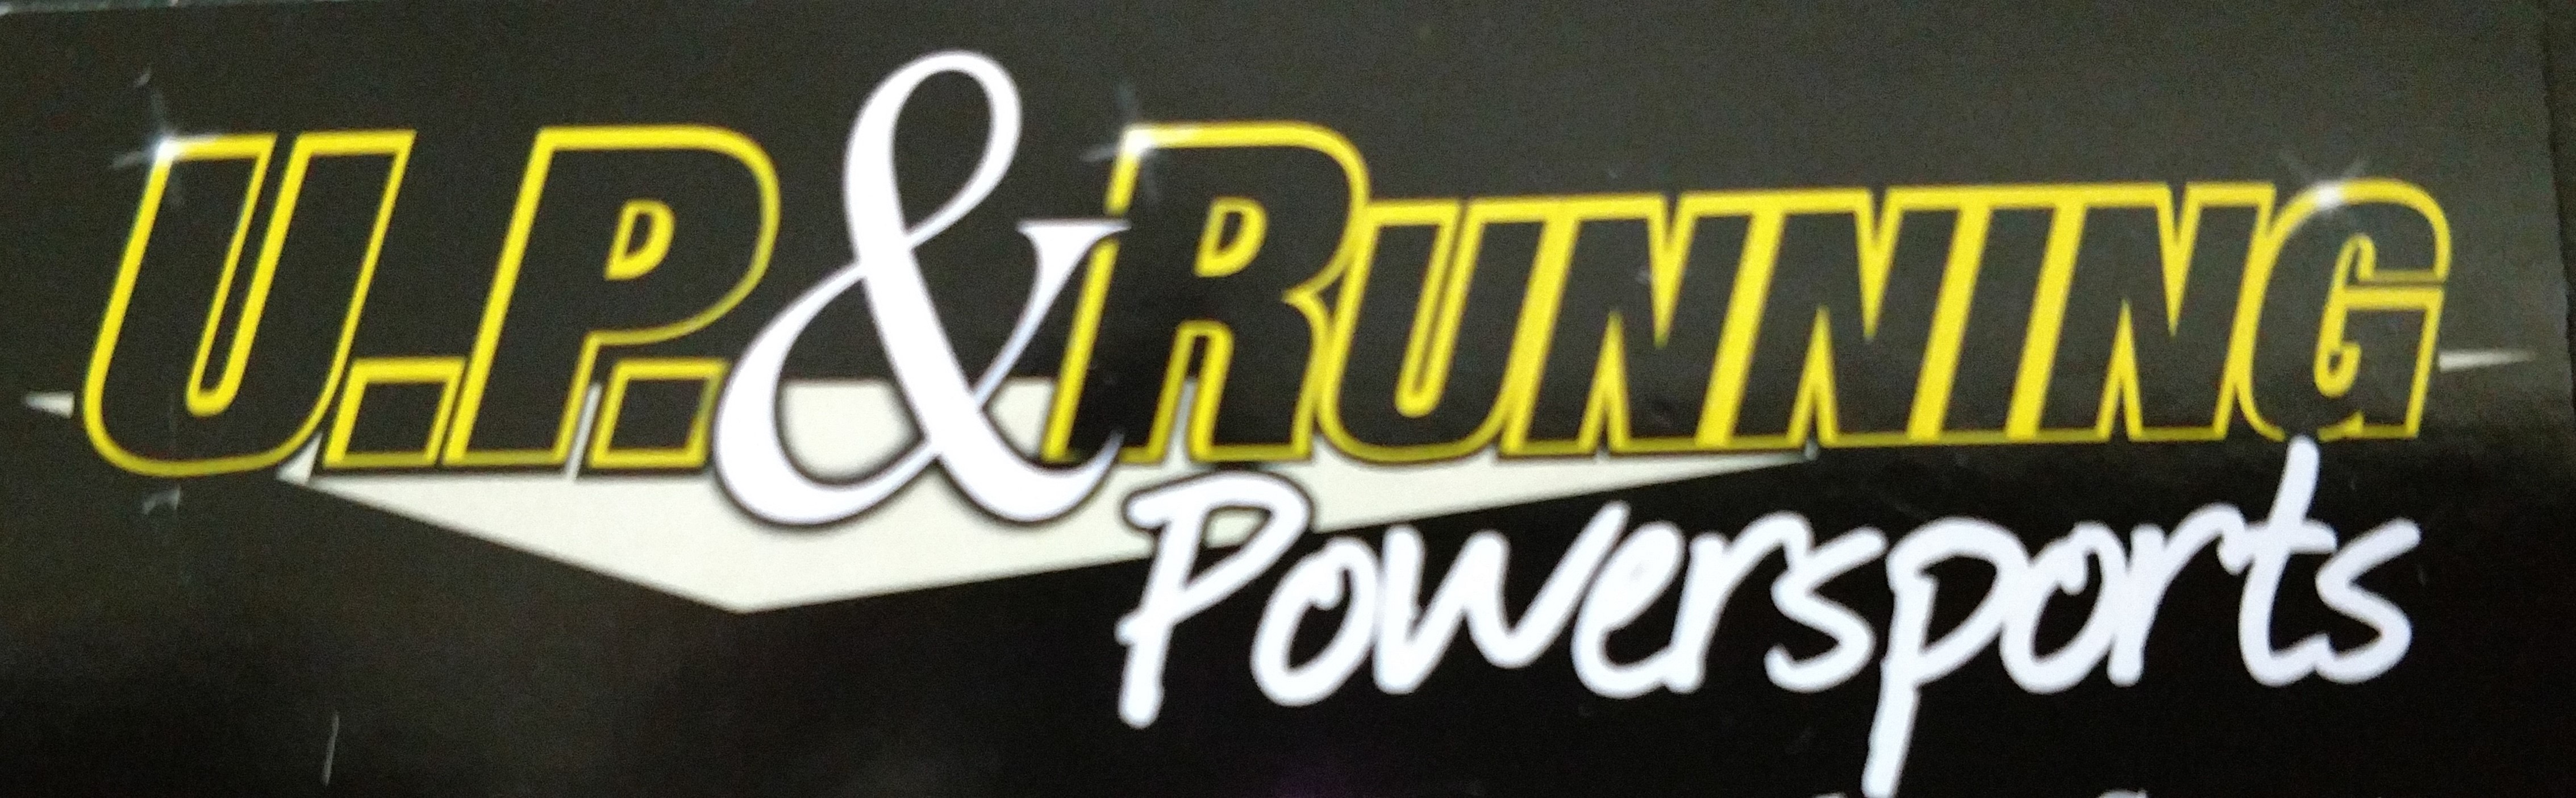 UP & Running Powersports